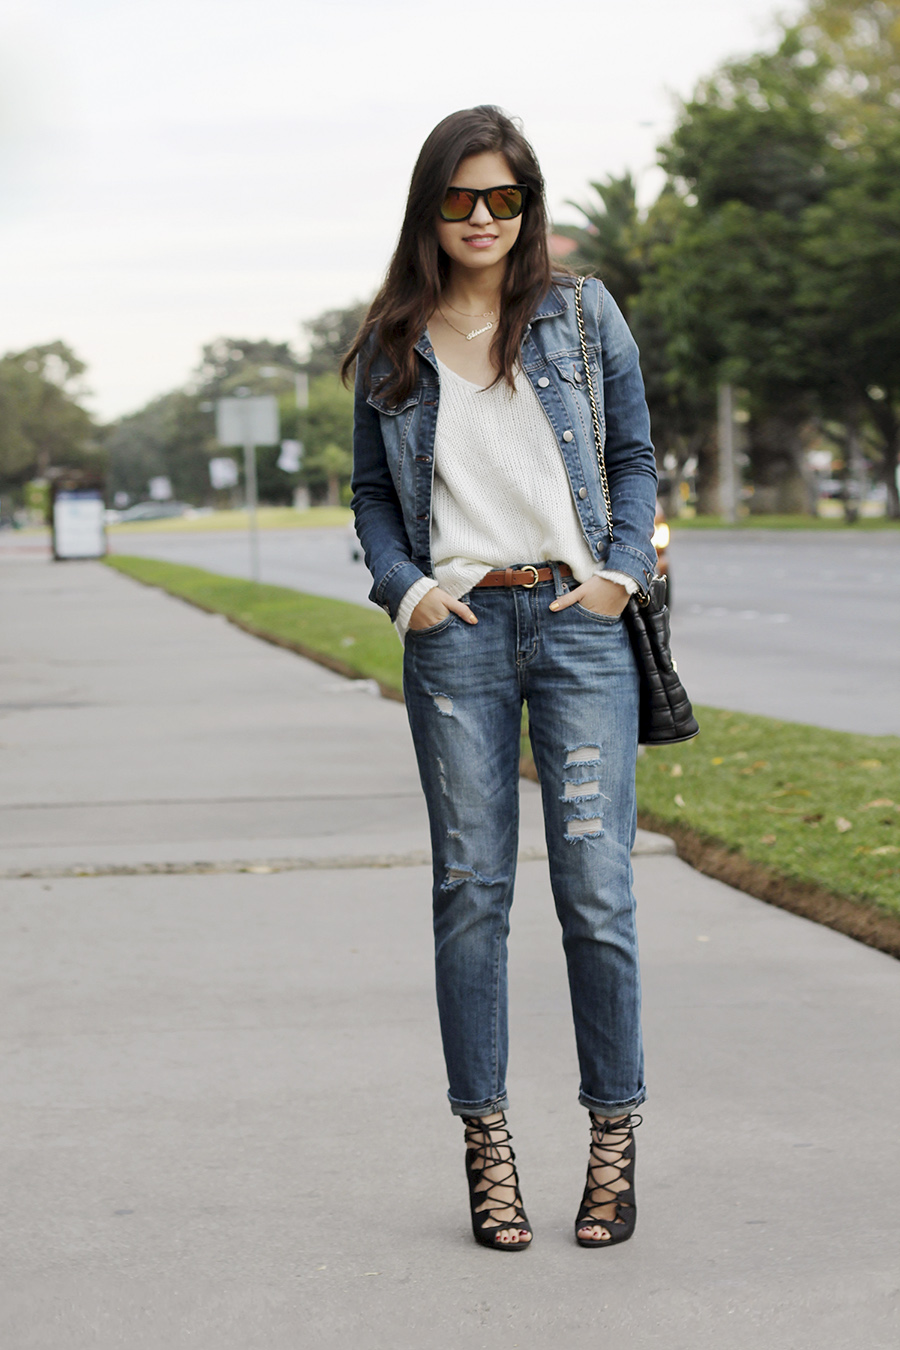 Jean jacket with jeans – Novelties of modern fashion photo blog